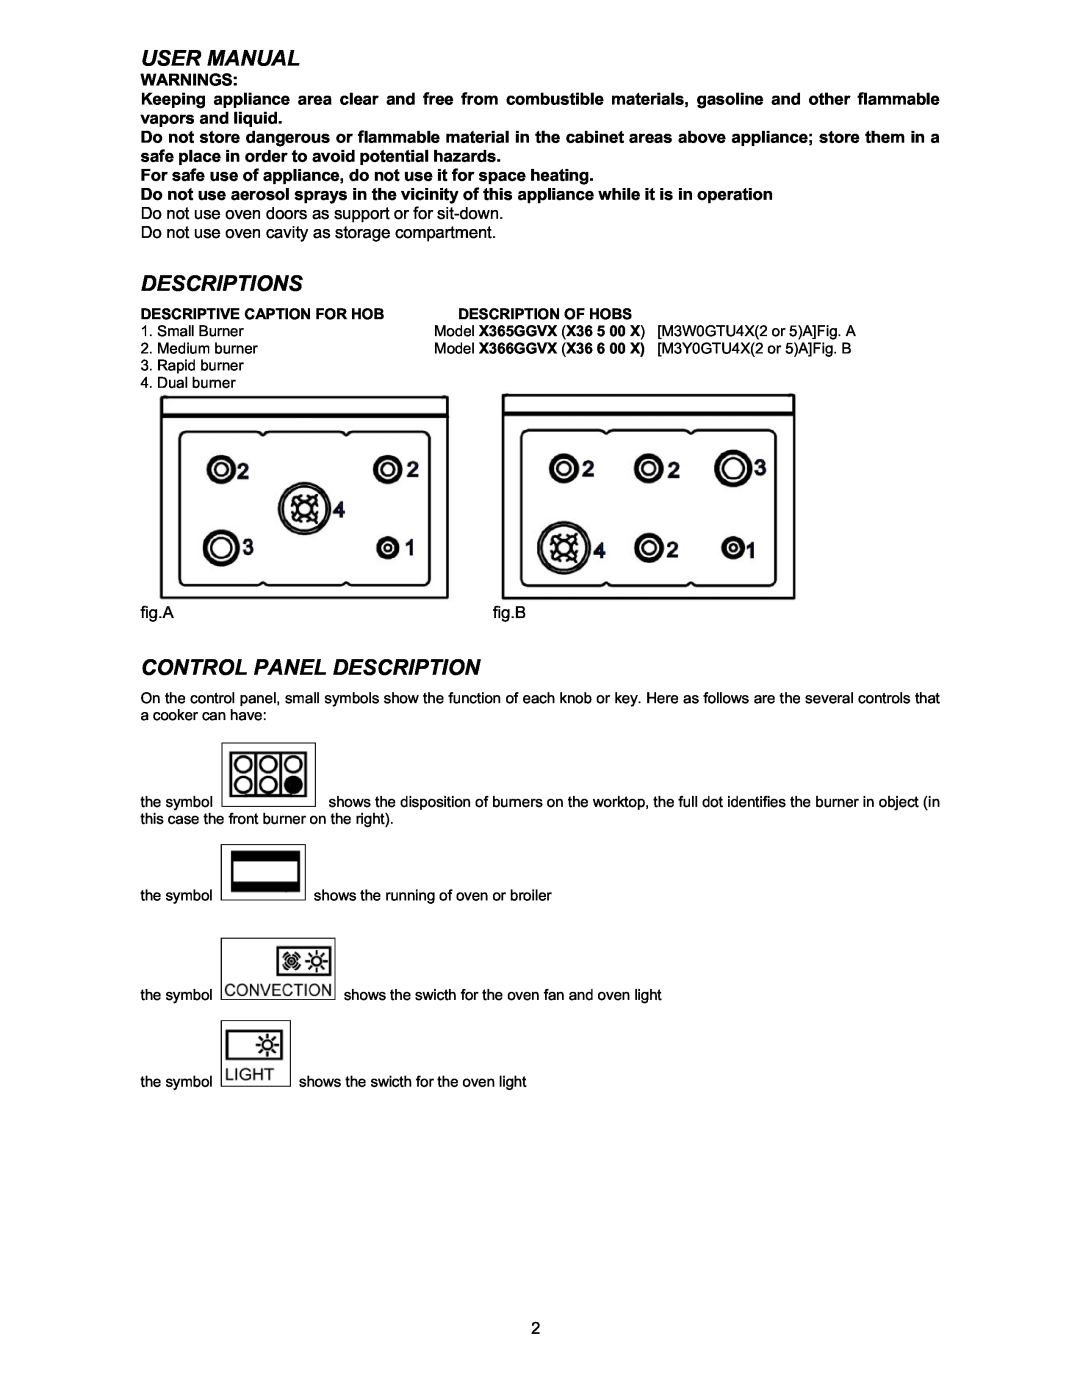 Bertazzoni X365GGVX (X36 5 00 X), X366GGVX (X36 6 00 X) dimensions Descriptions, Control Panel Description 